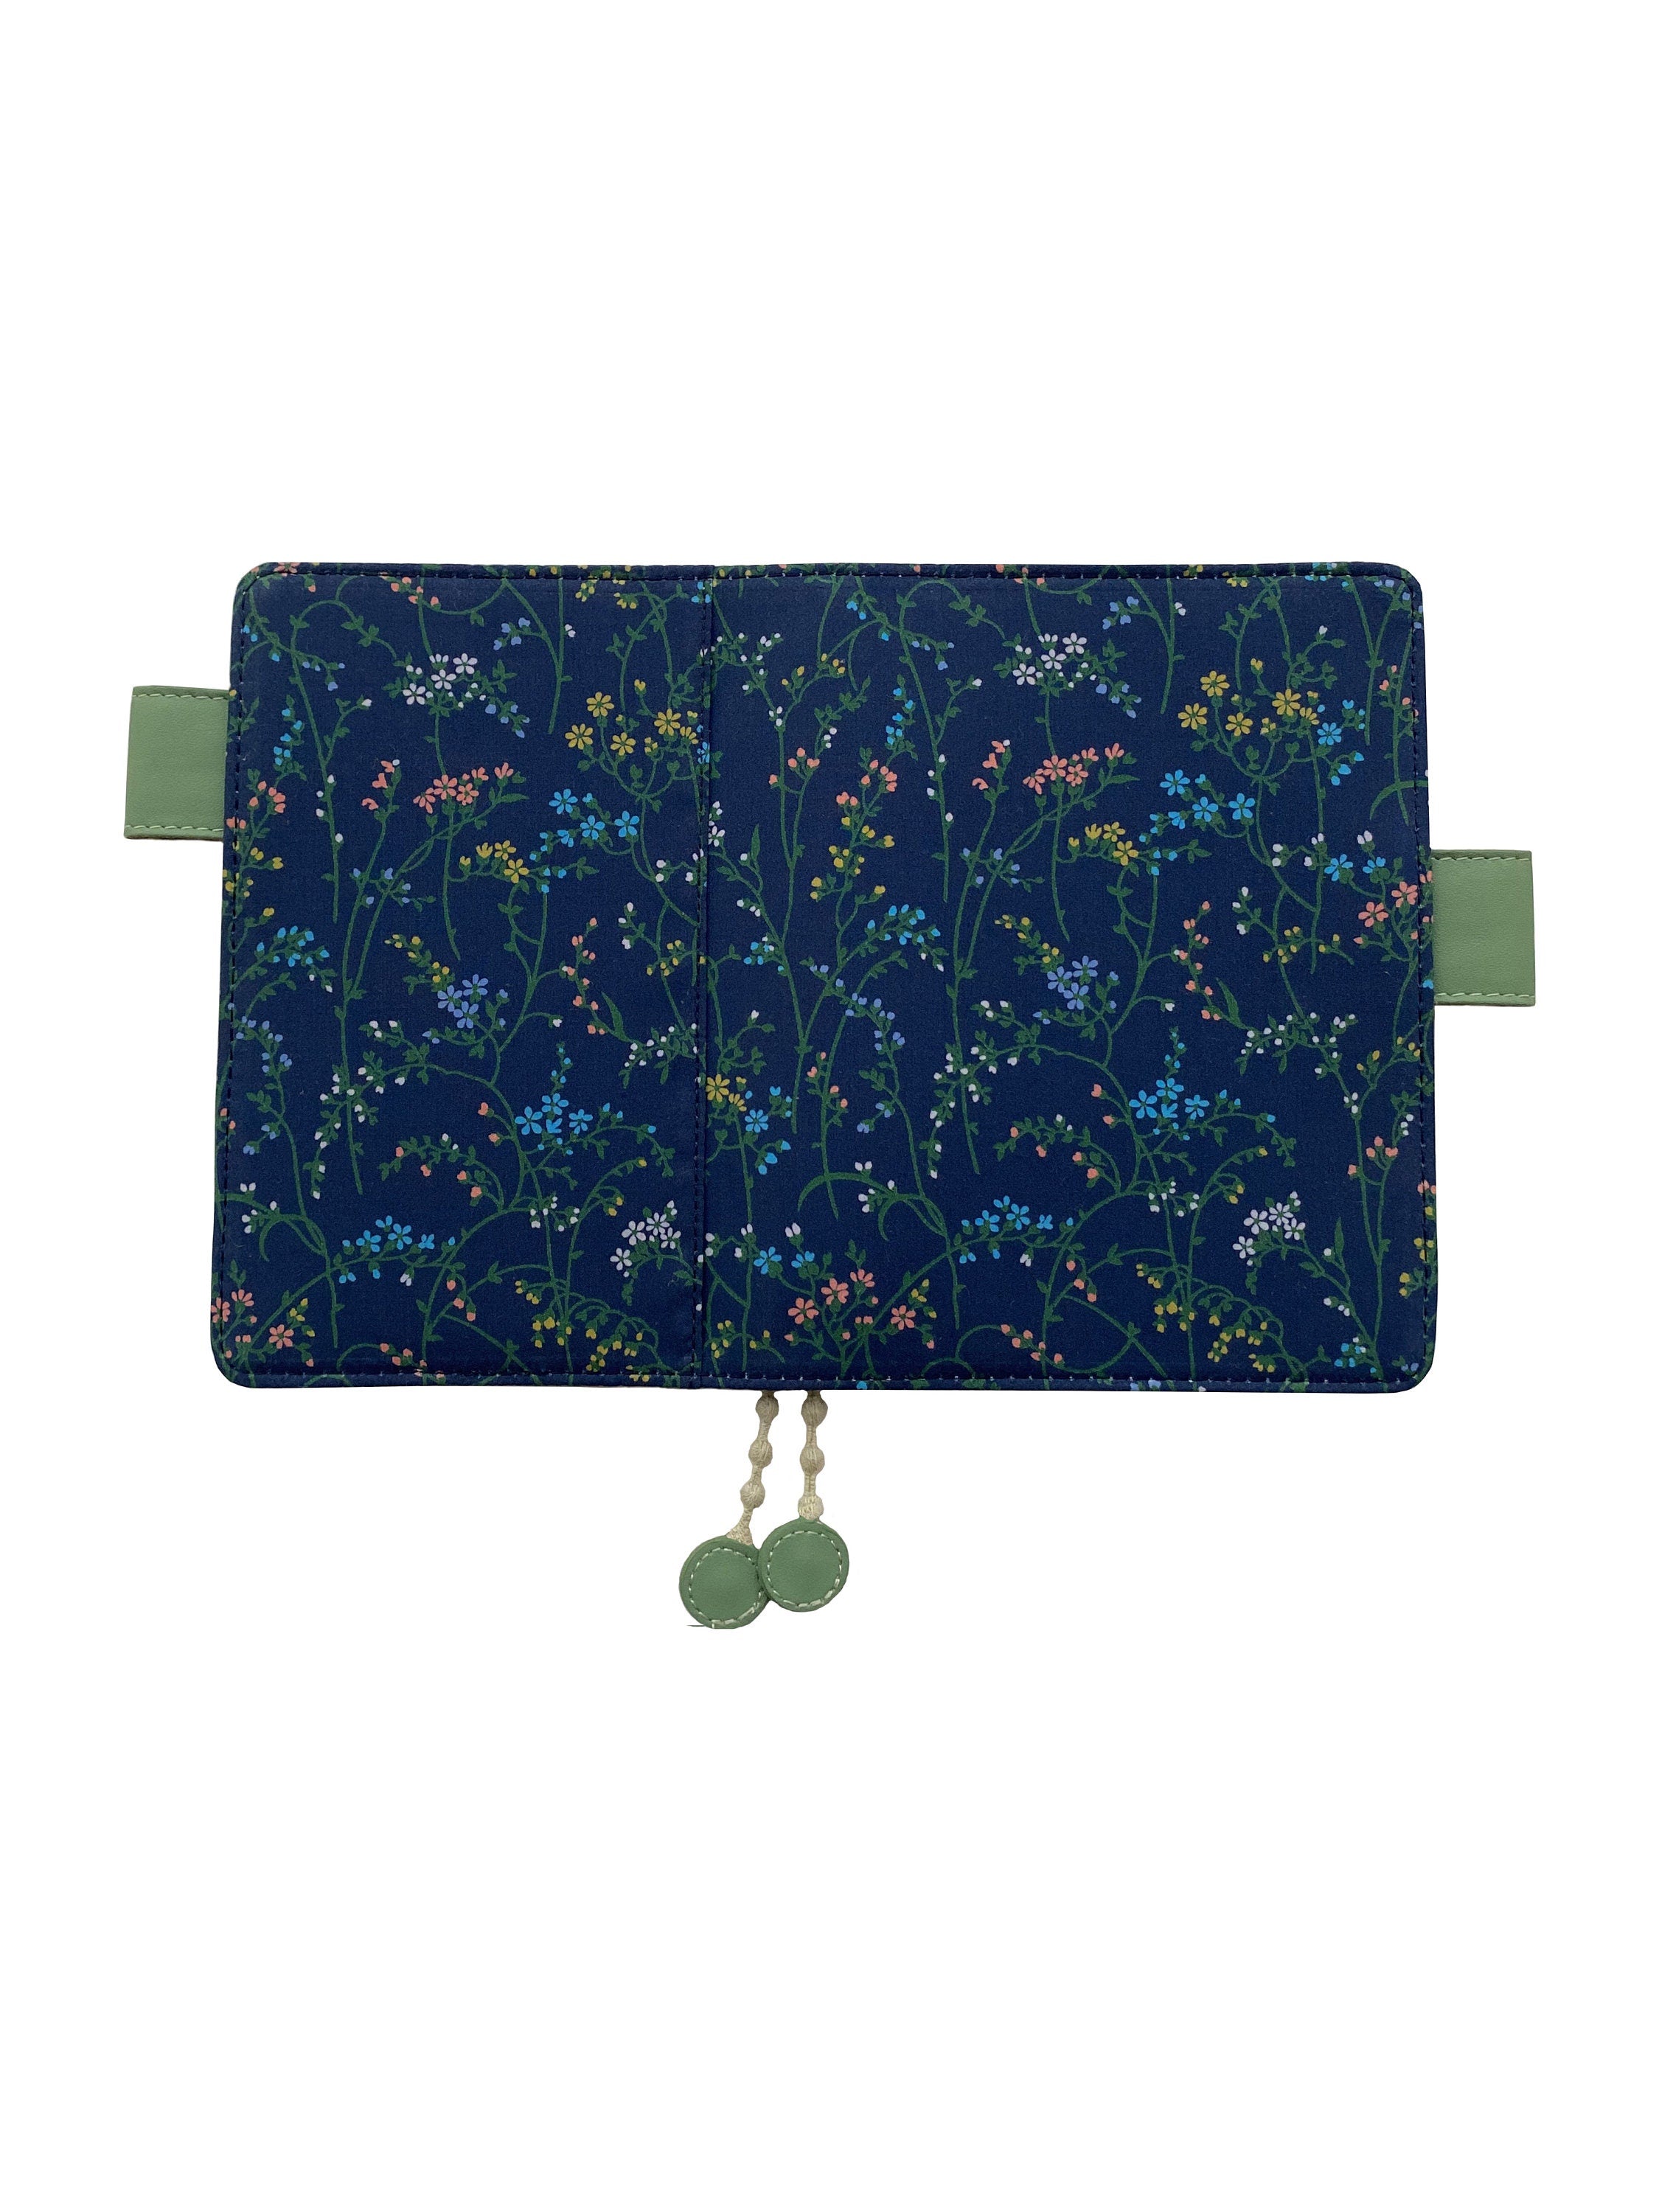 Long Stem Wildflowers Notebook Journal Dark Blue Fabric Handmade Jacket Pocket Notebook Covers Leather Interior A5 A6 Notepad Wedding Gift